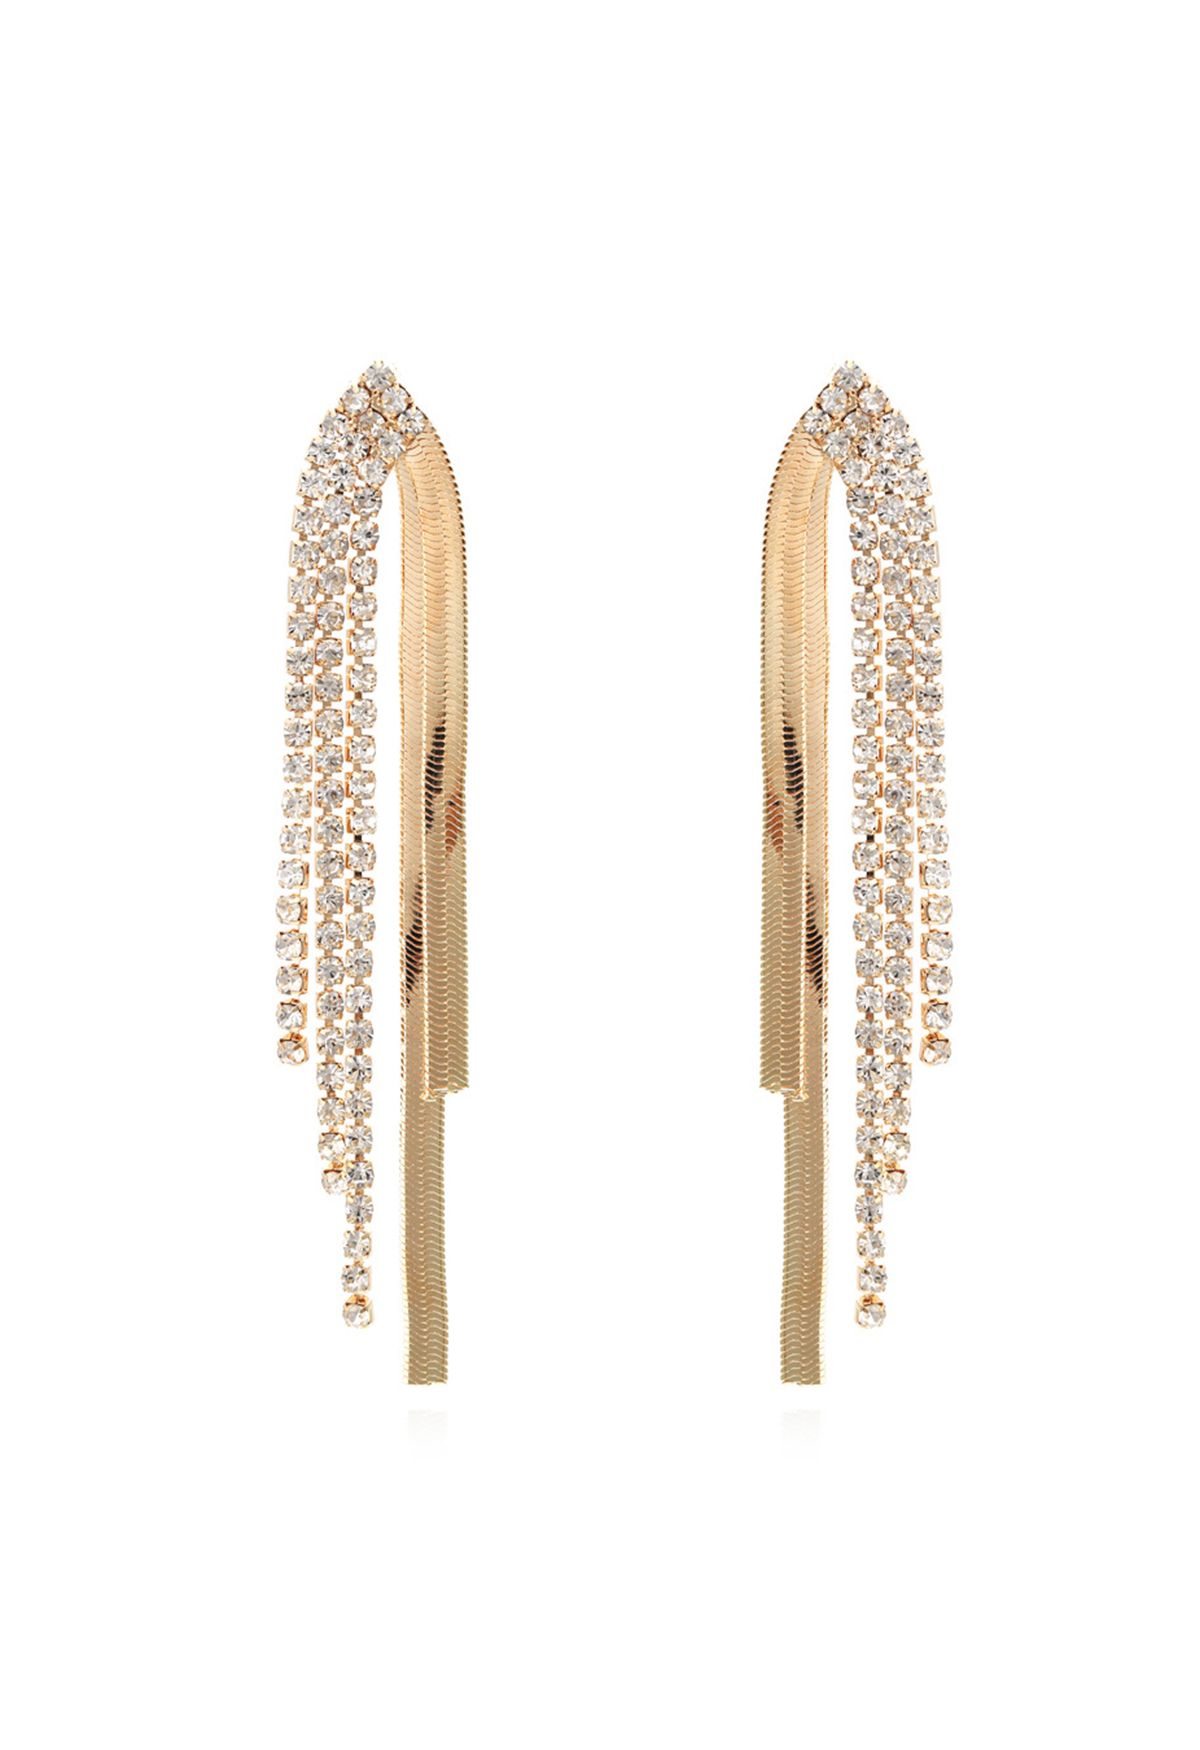 Aretes colgantes de lujo con detalles de diamantes en oro